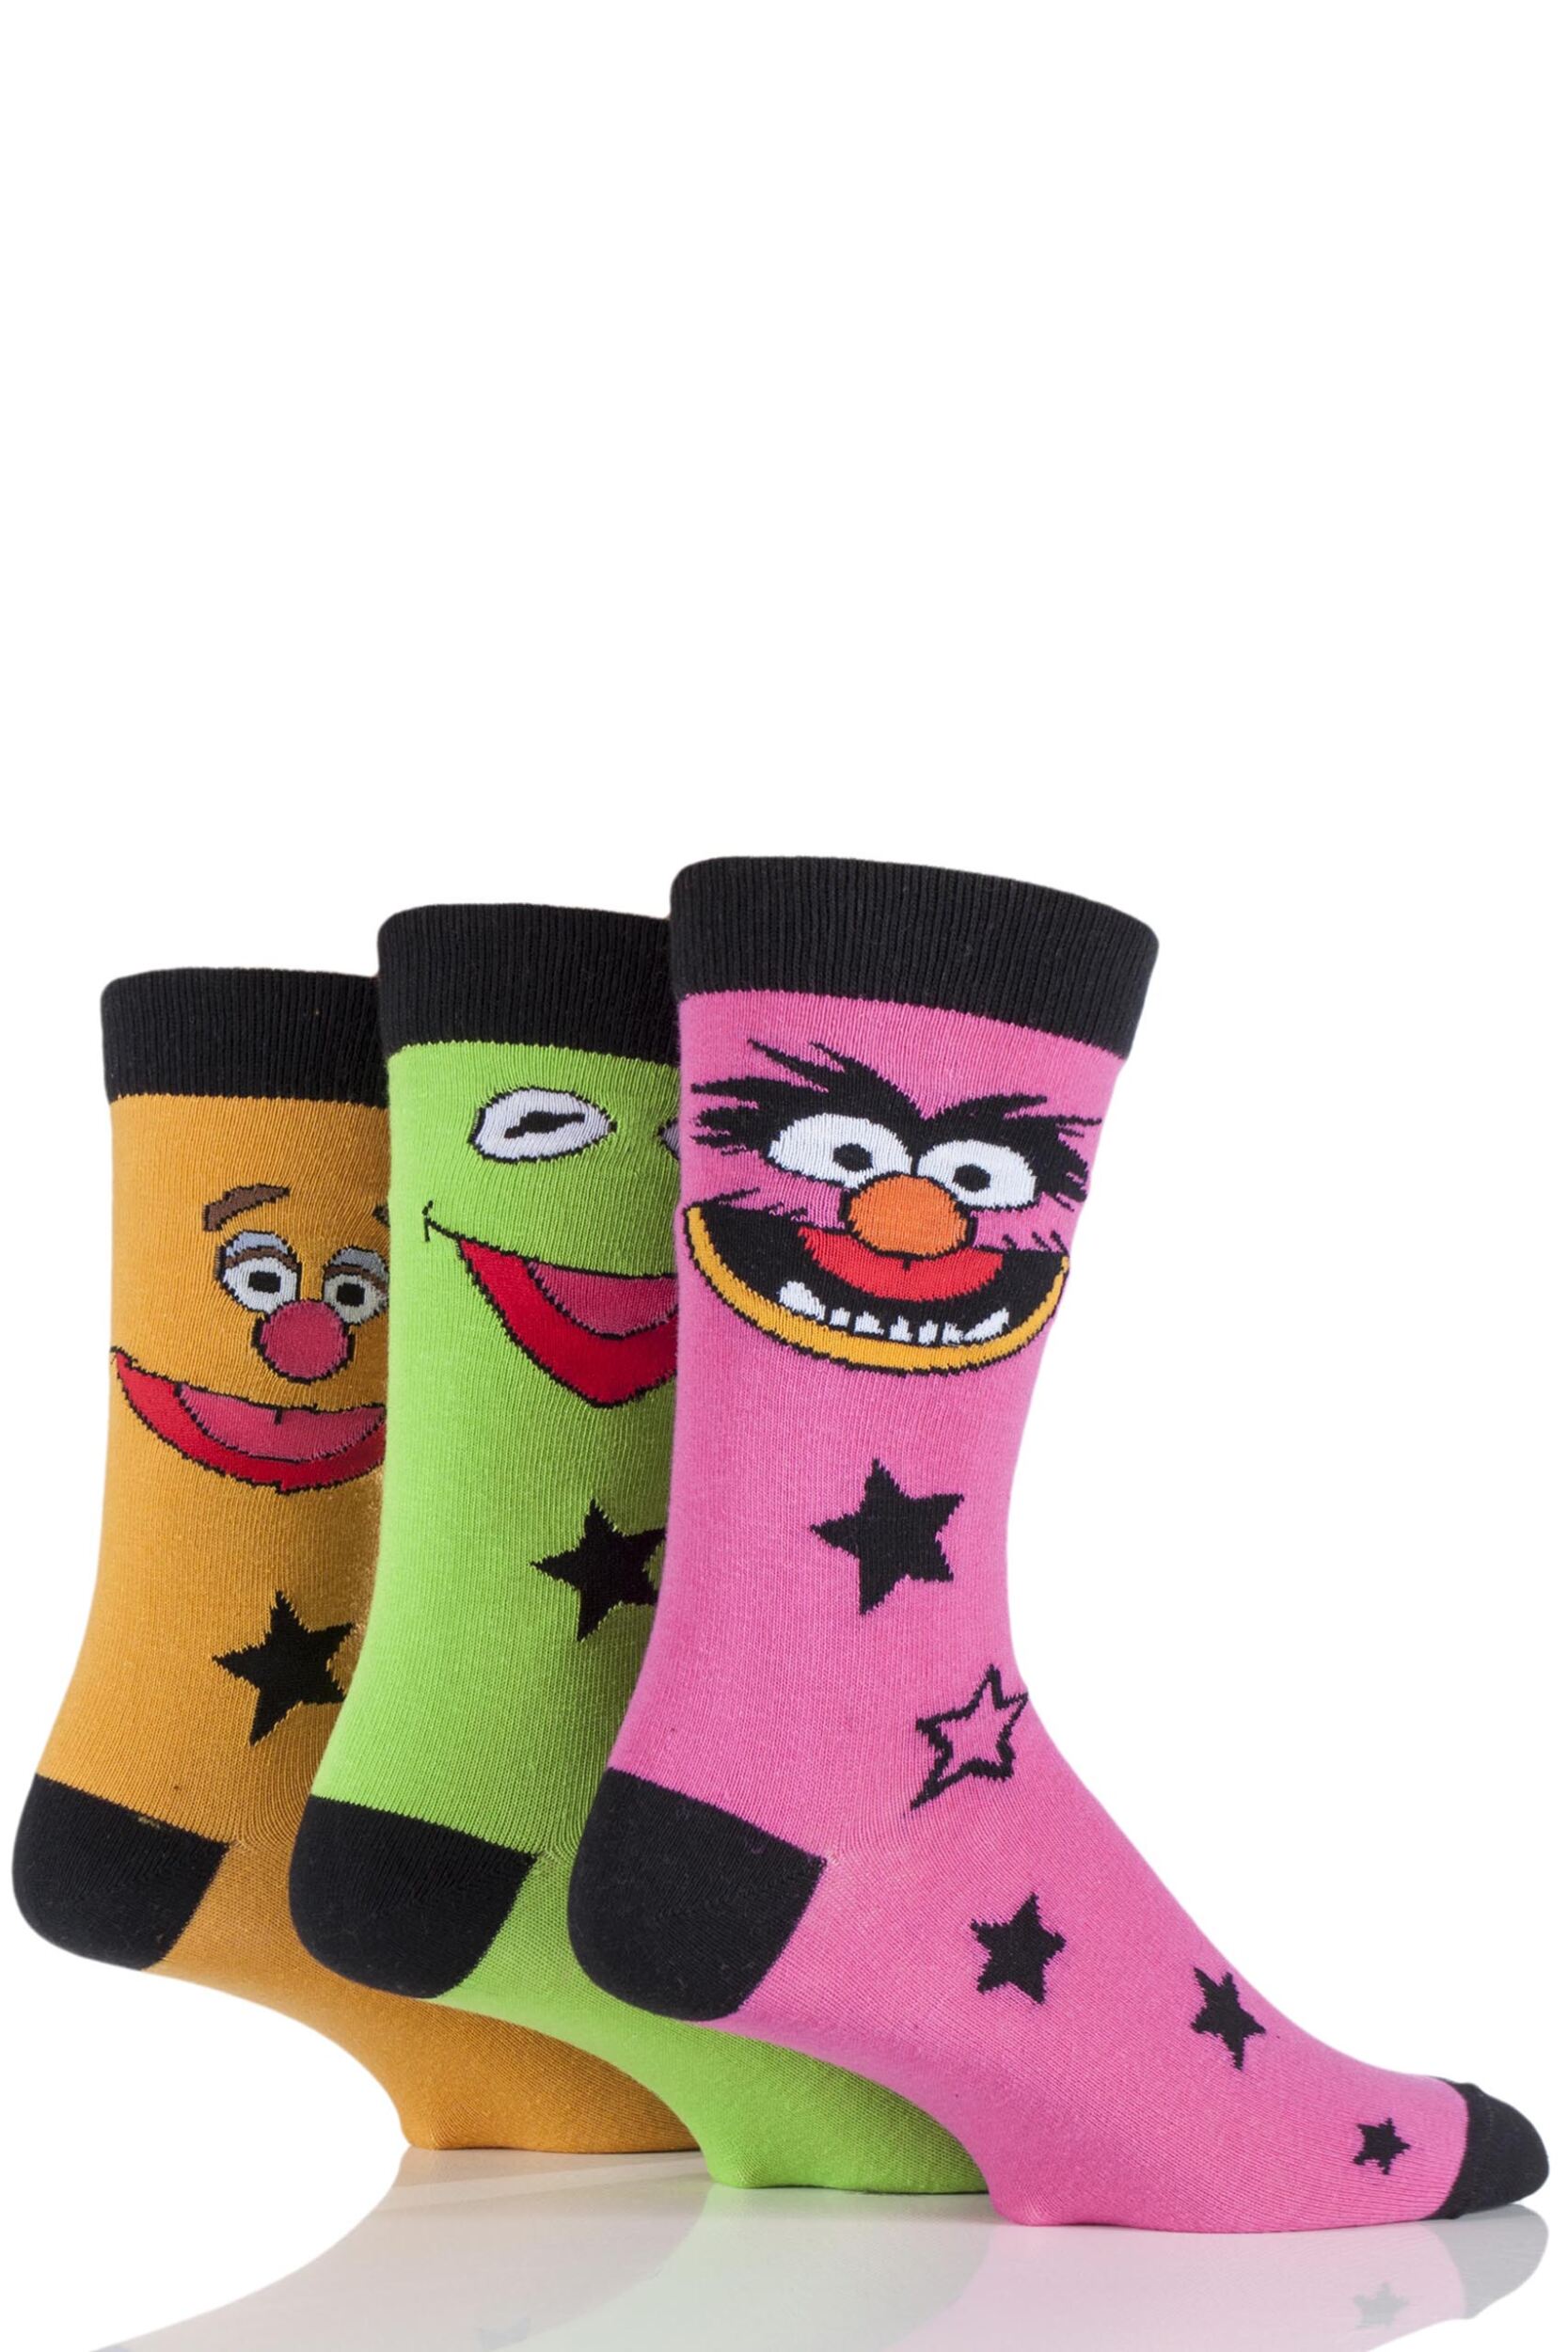 3 Pair Assorted Muppets Socks Men's 6-11 Mens - Film & TV Characters